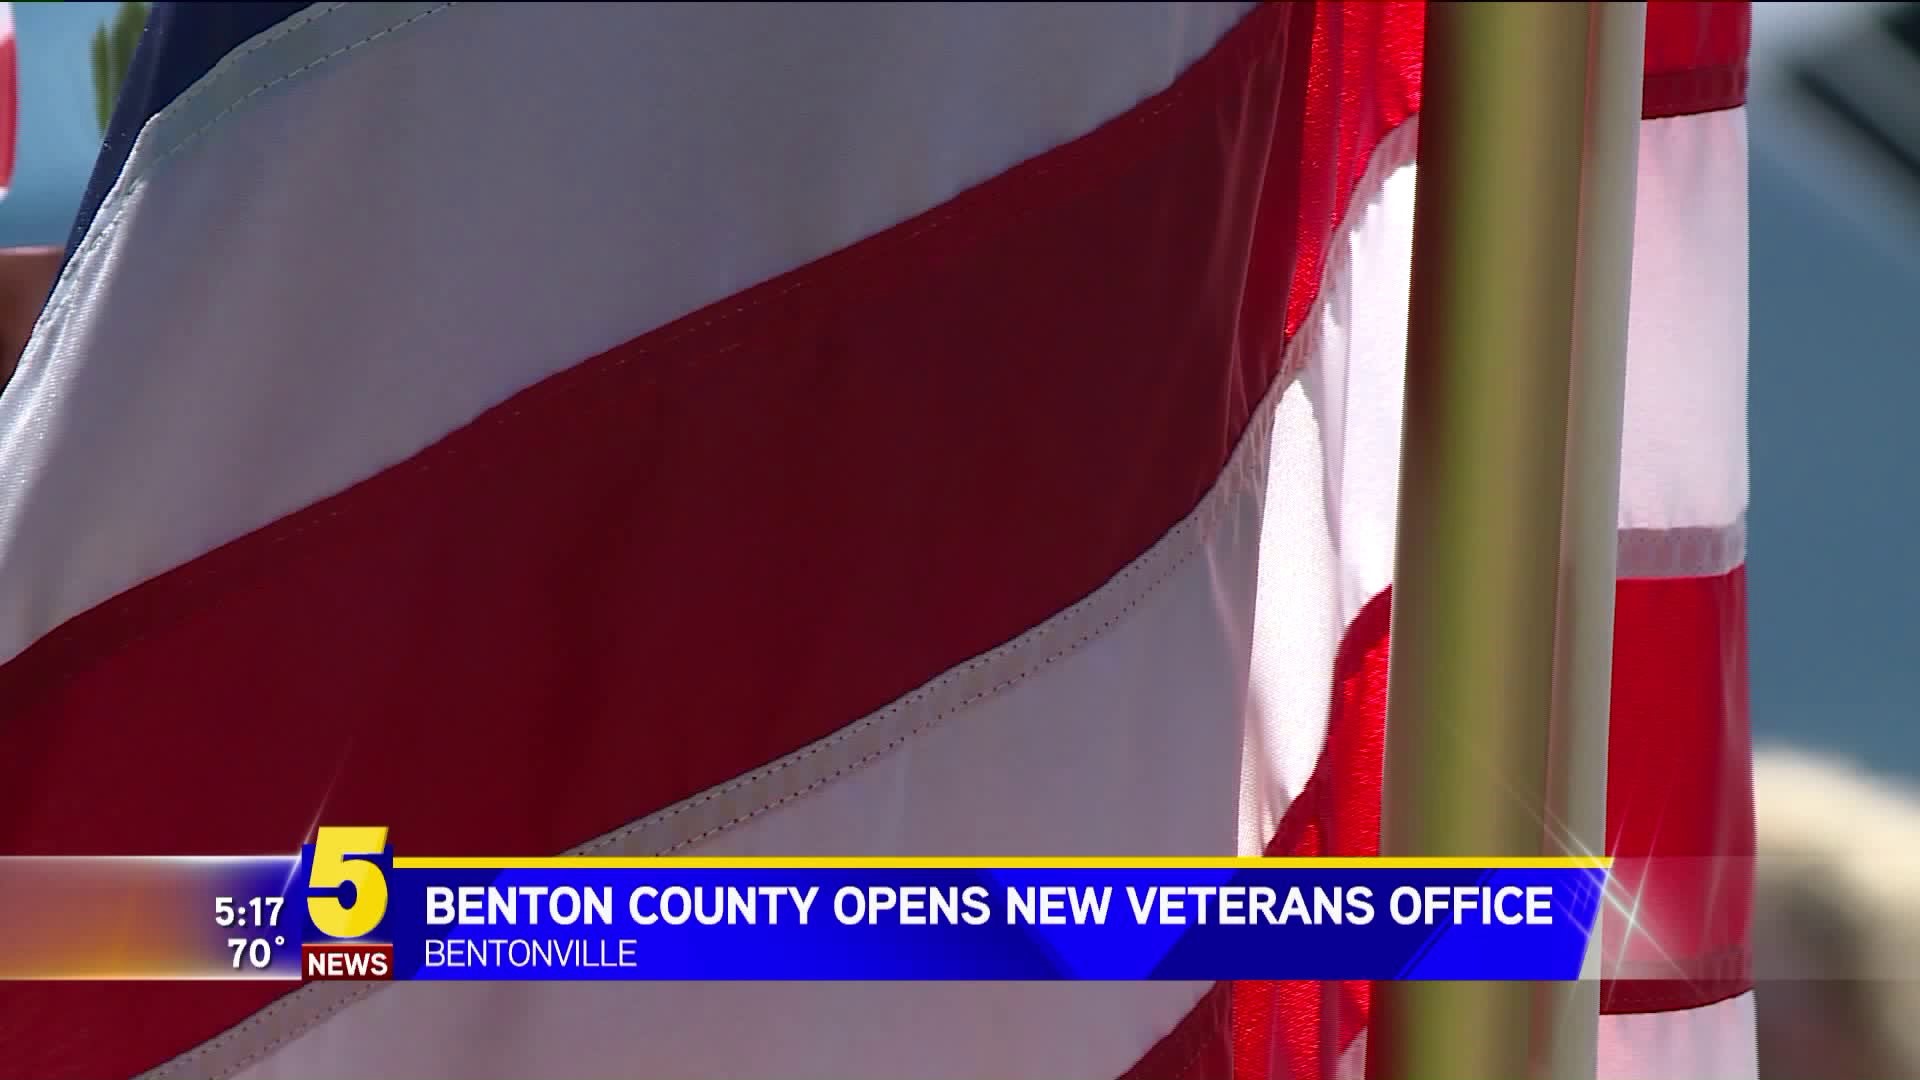 Benton County Opens New Veterans Office